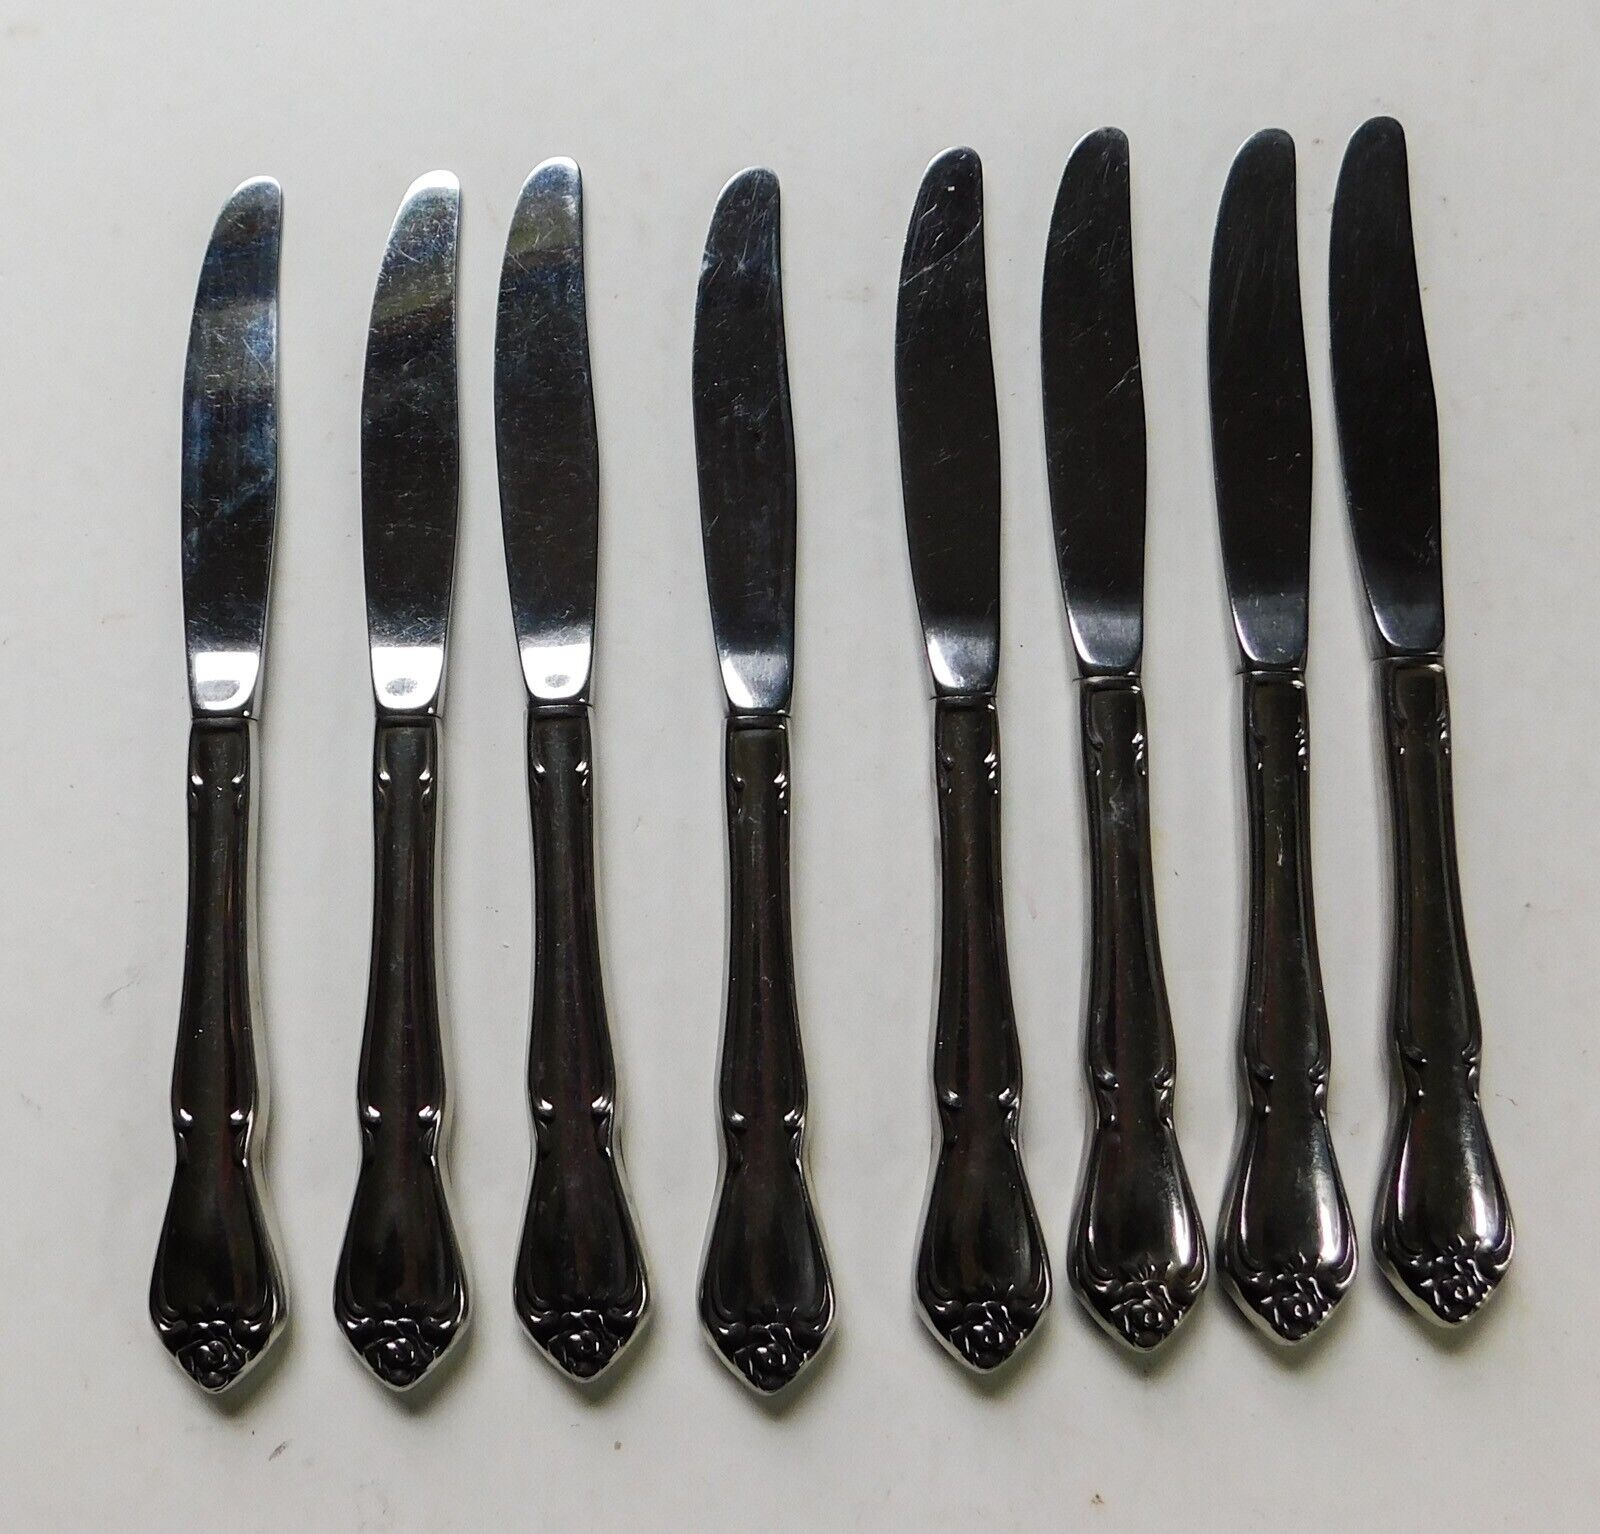 8 Knives Oneida True Rose Arbor Rogers Stainless Silverware Flatware